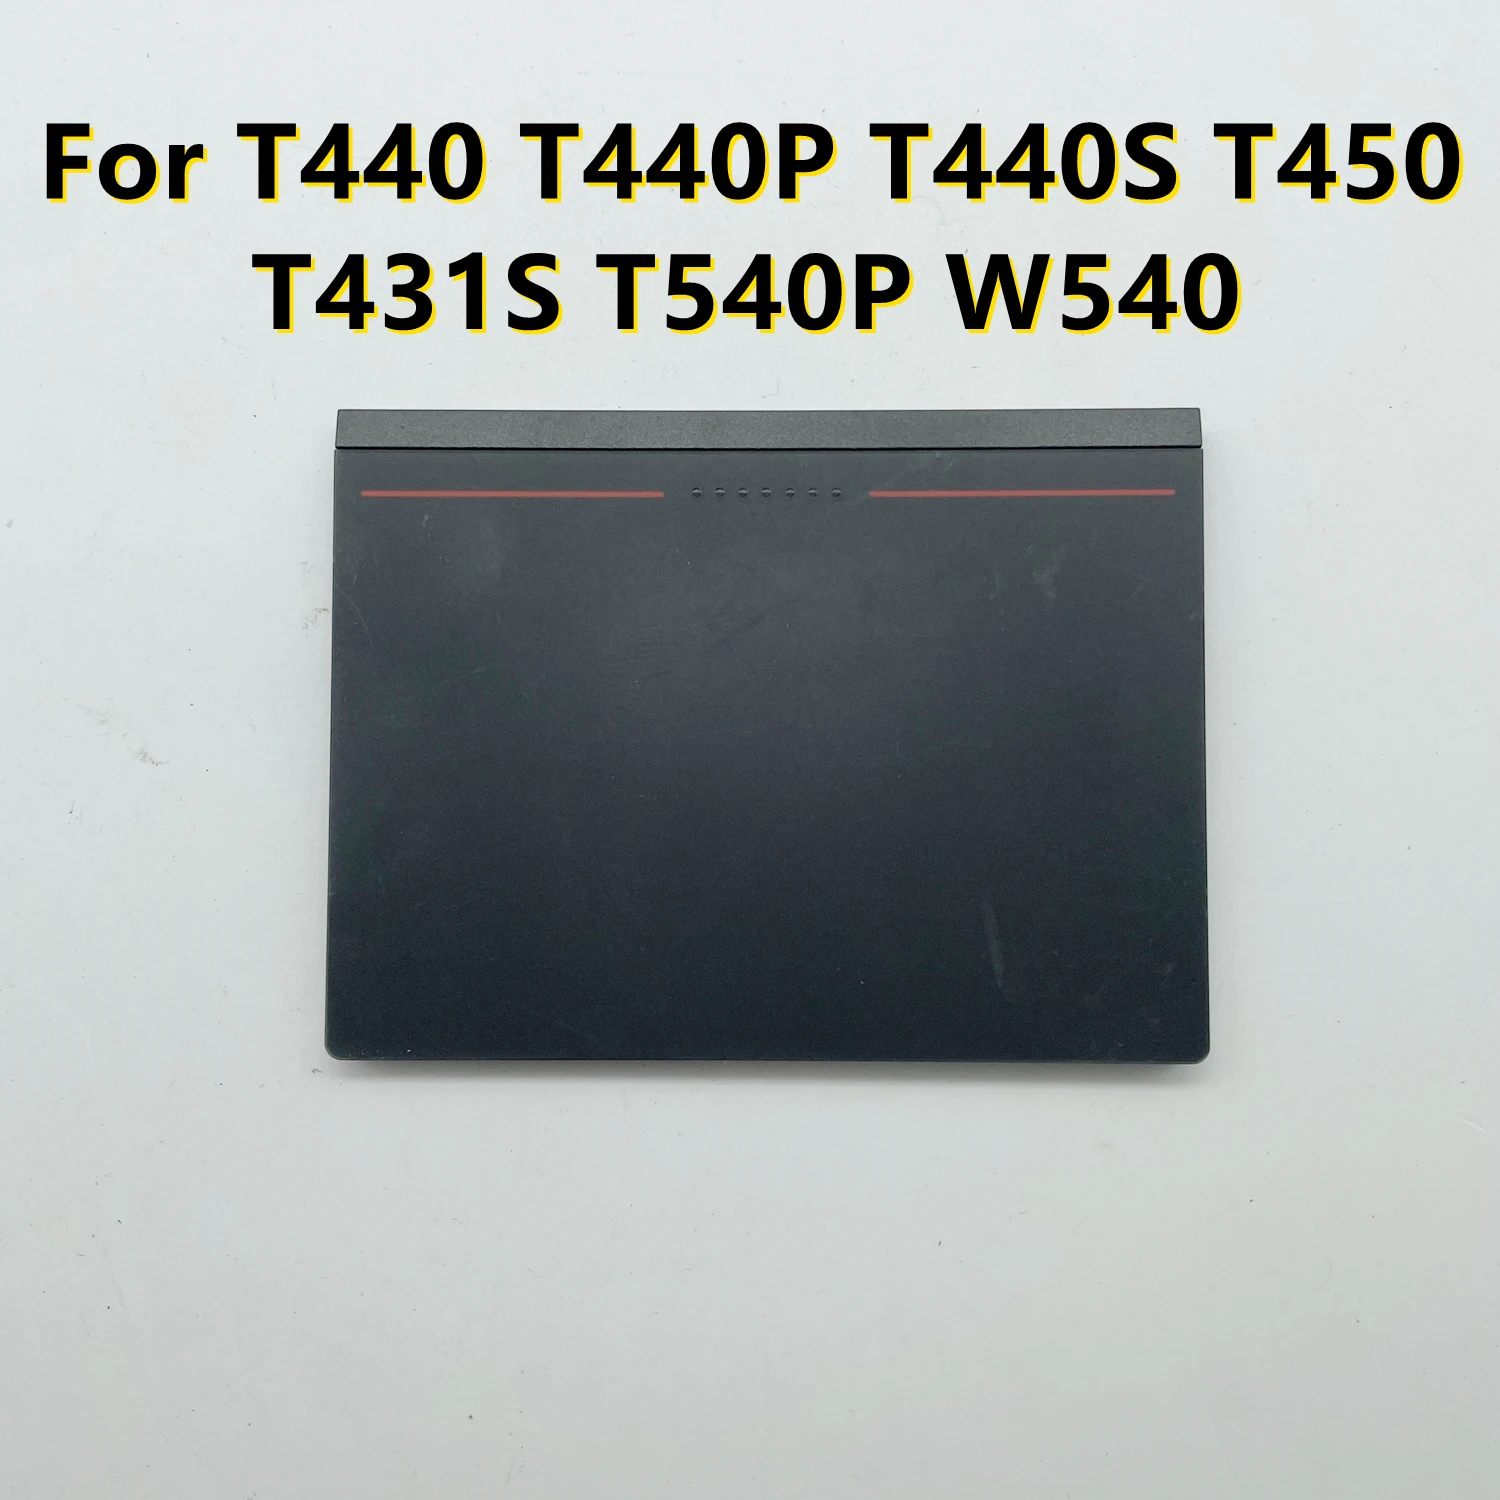 Тачпад Для Ноутбука Lenovo ThinkPad T440 T440P T440S T450 L440 S440 E531 T431S T540P W540 L540 E540 Сенсорная Панель